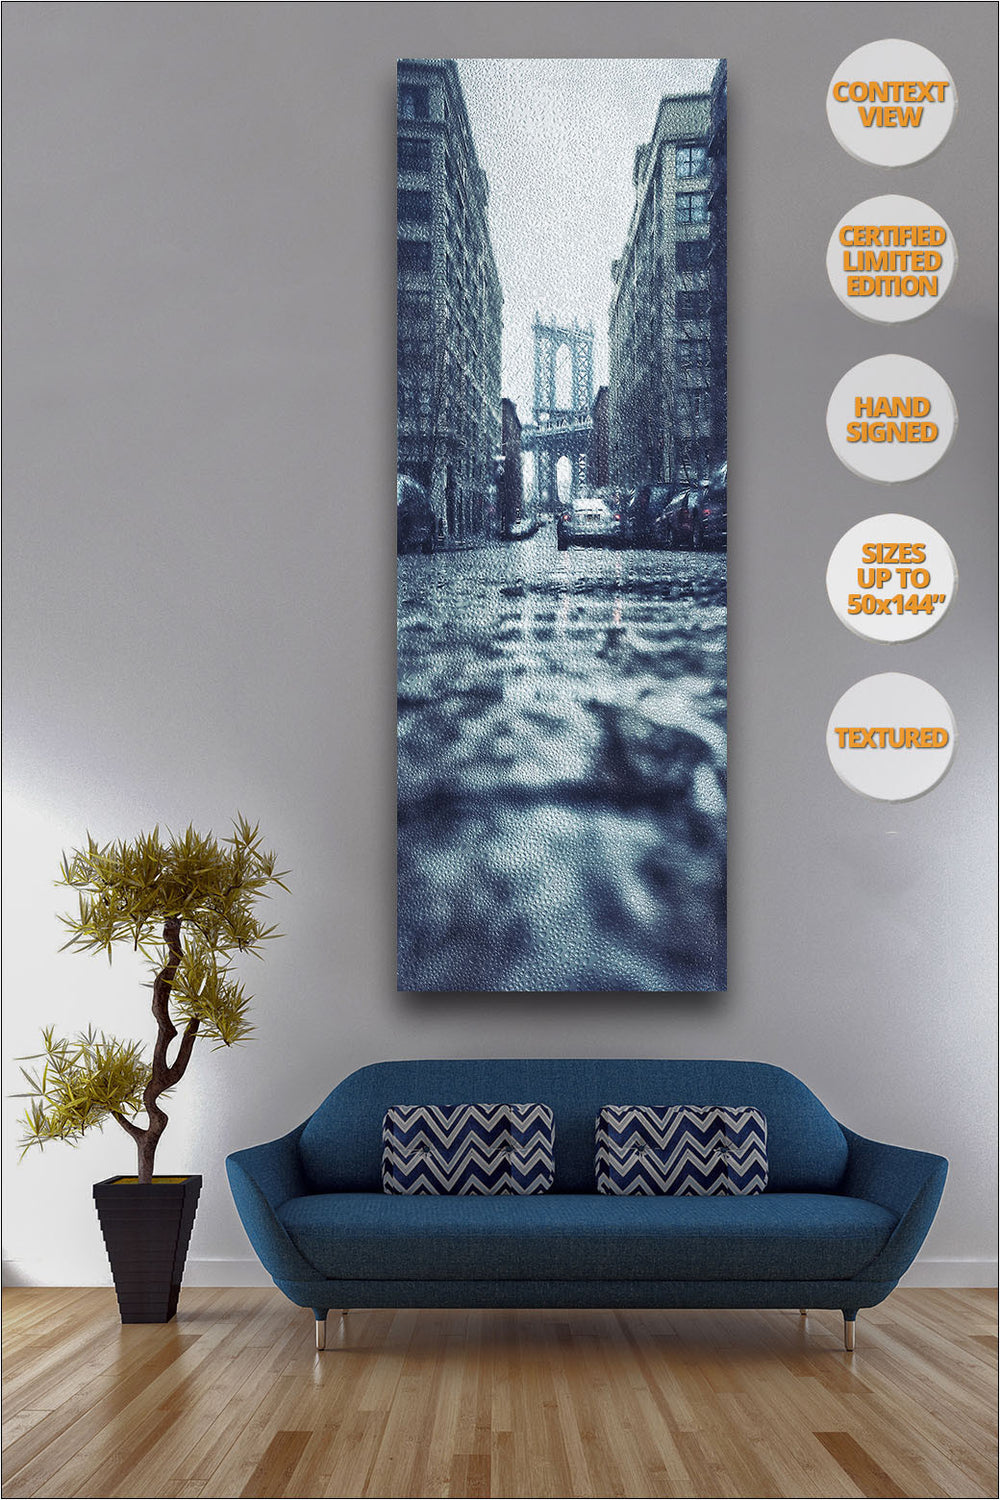 Manhattan Bridge in the rain, NYC. | Limited Edition Giant Print hanged over sofa.